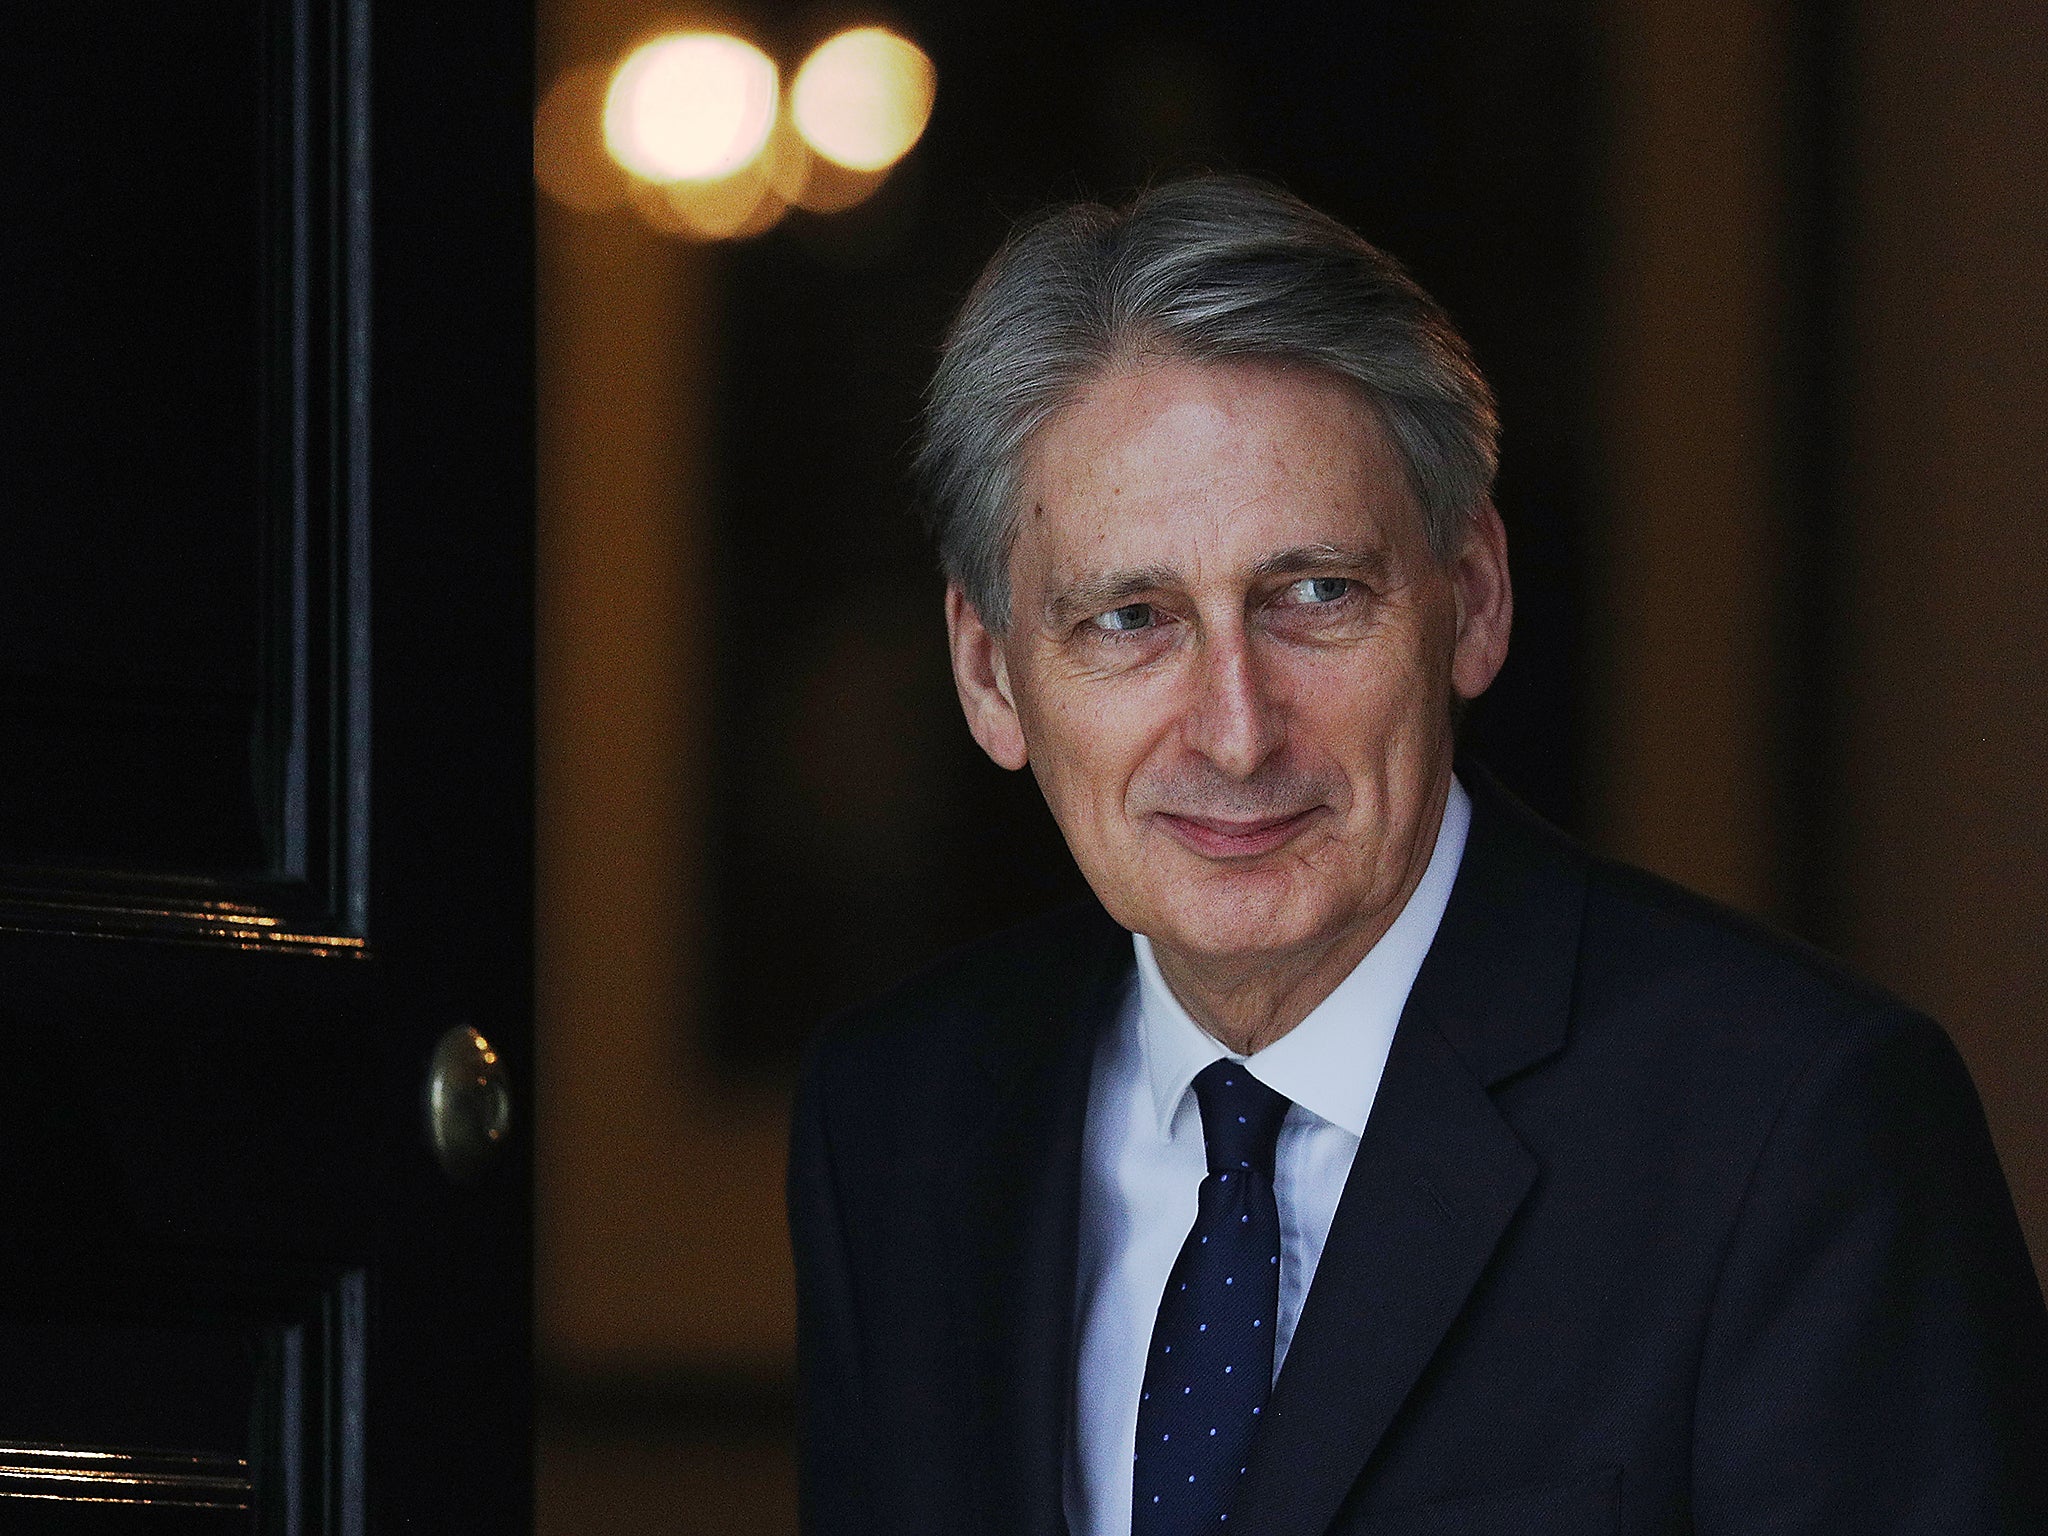 Chancellor Philip Hammond walks out of 11 Downing Street to greet the US Secretary of the Treasury Steven Mnuchin